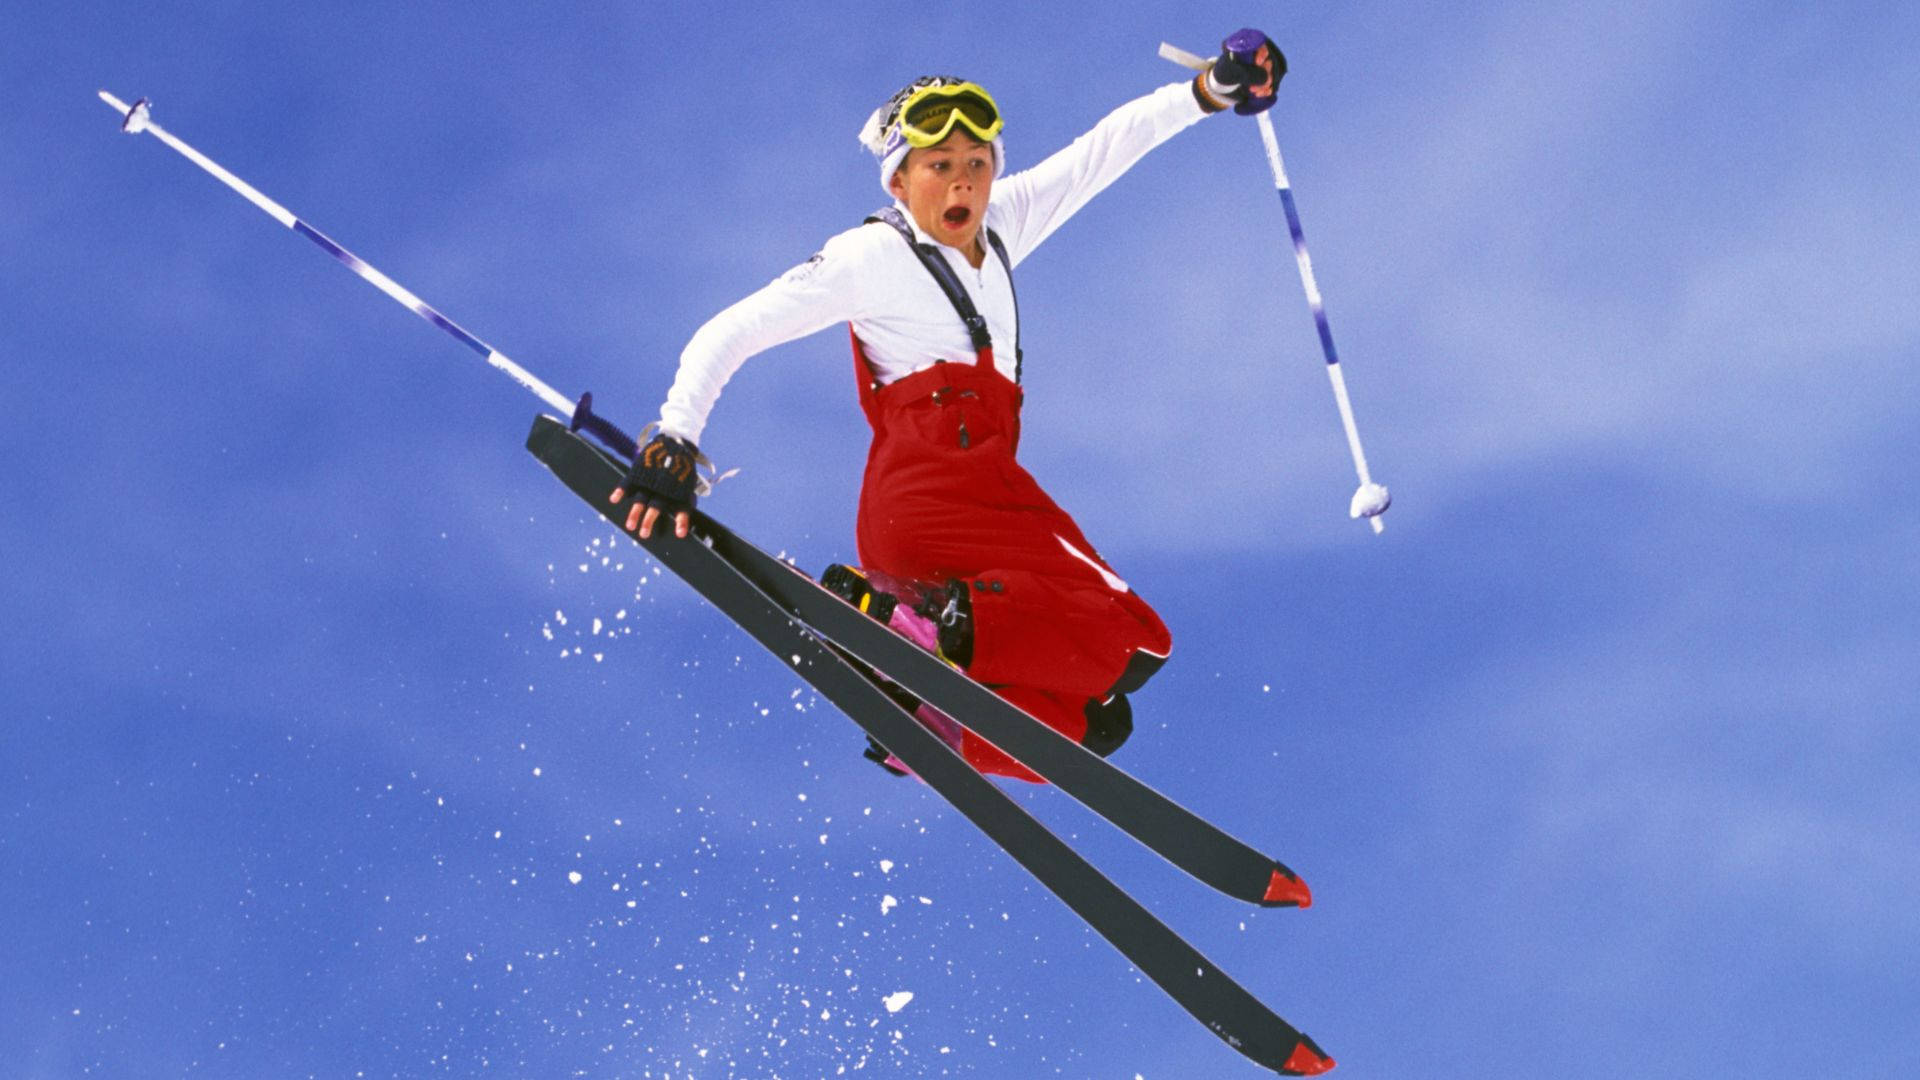 Hilarious Person Ski Jumping